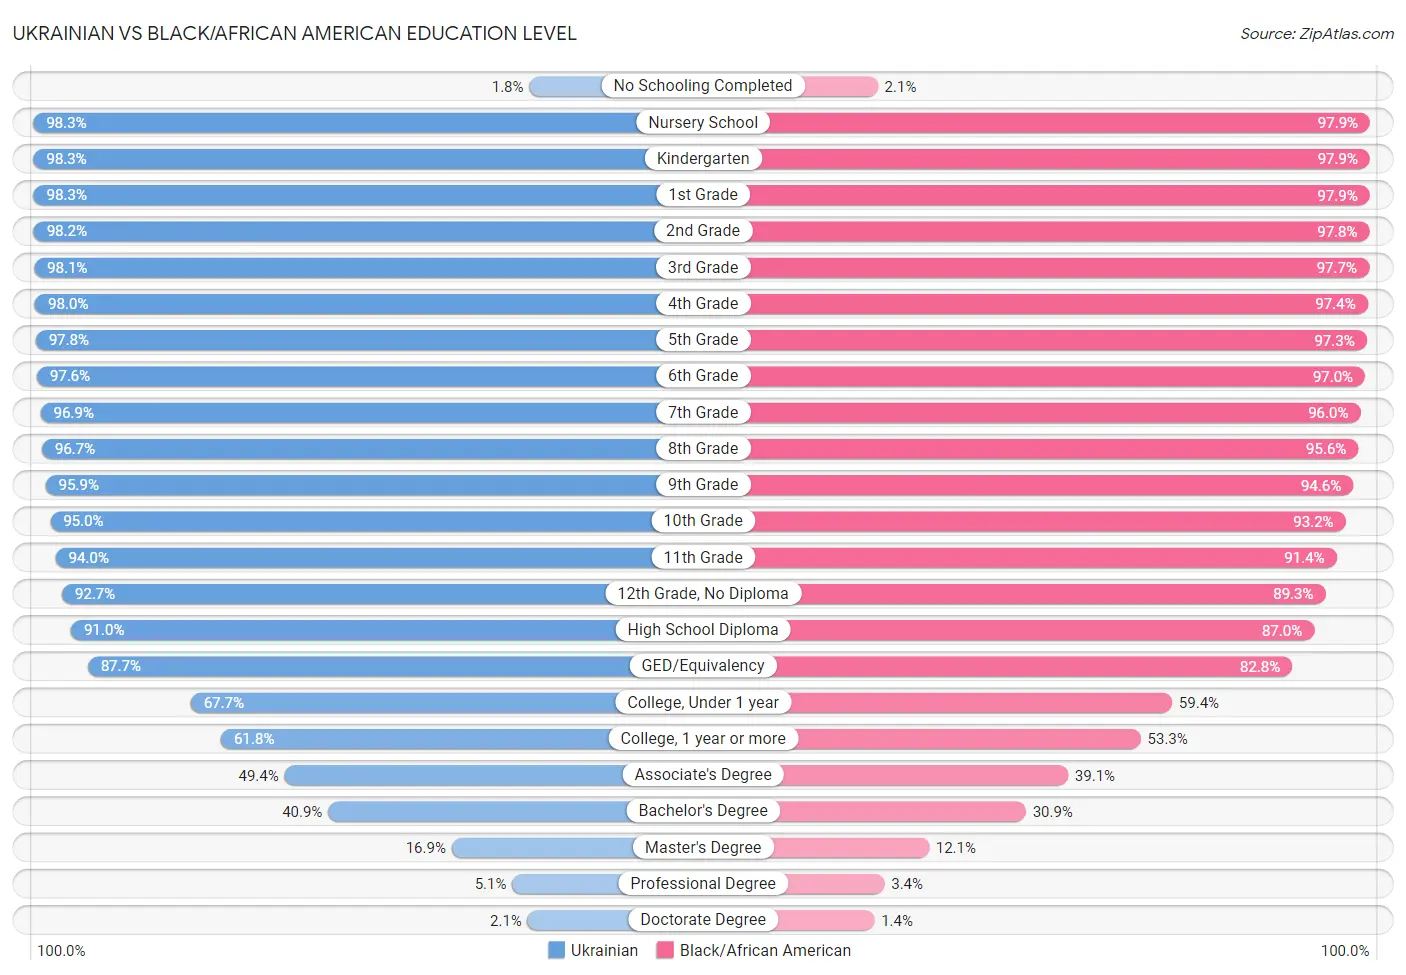 Ukrainian vs Black/African American Education Level